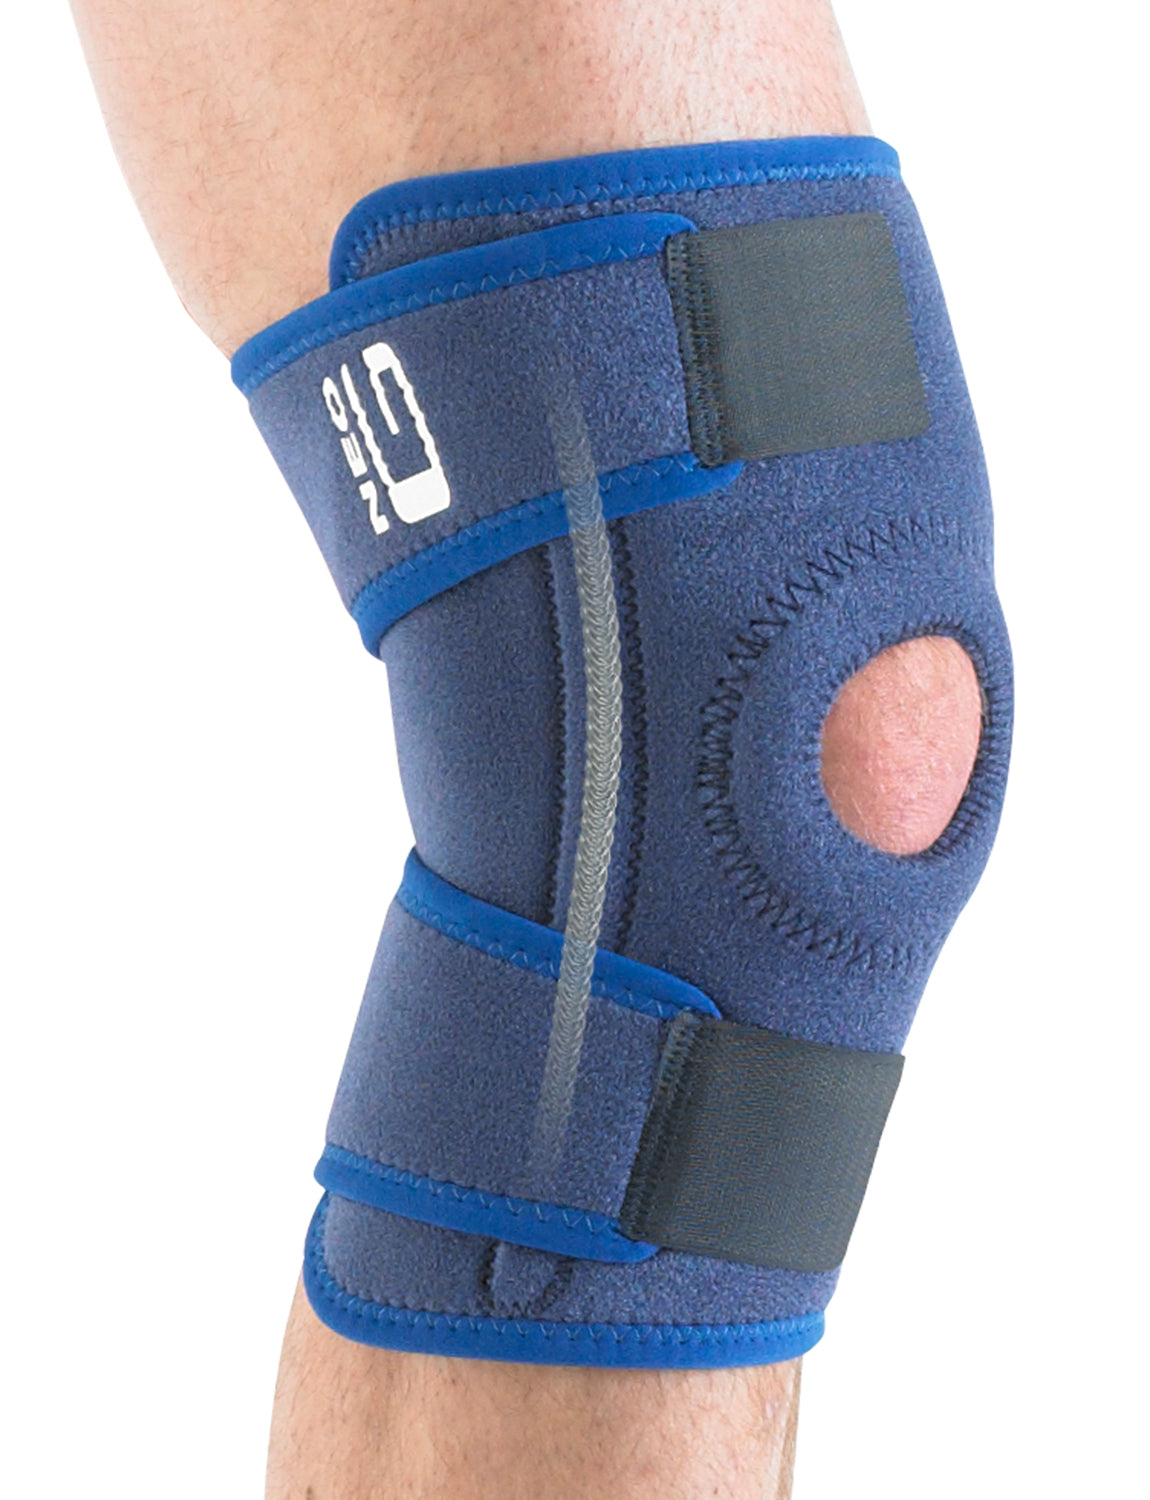 LPM Knee Guard 758 Open Patella Adjustable Velcro Knee Support Thick  Neoprene Knee Brace For Knee Pain Relief